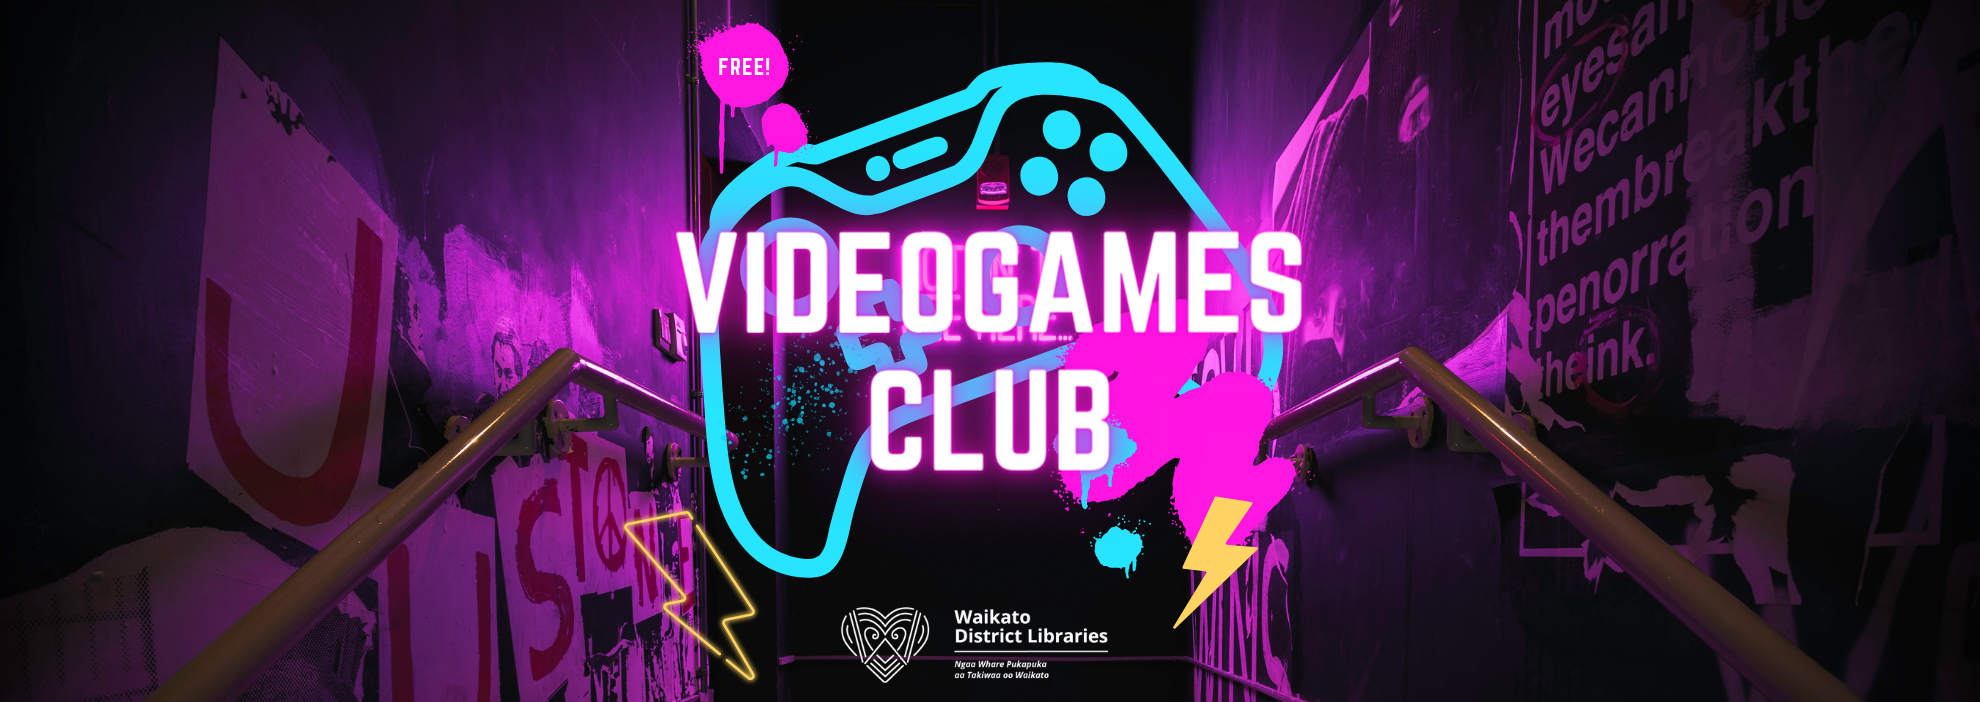 Videogames club banner